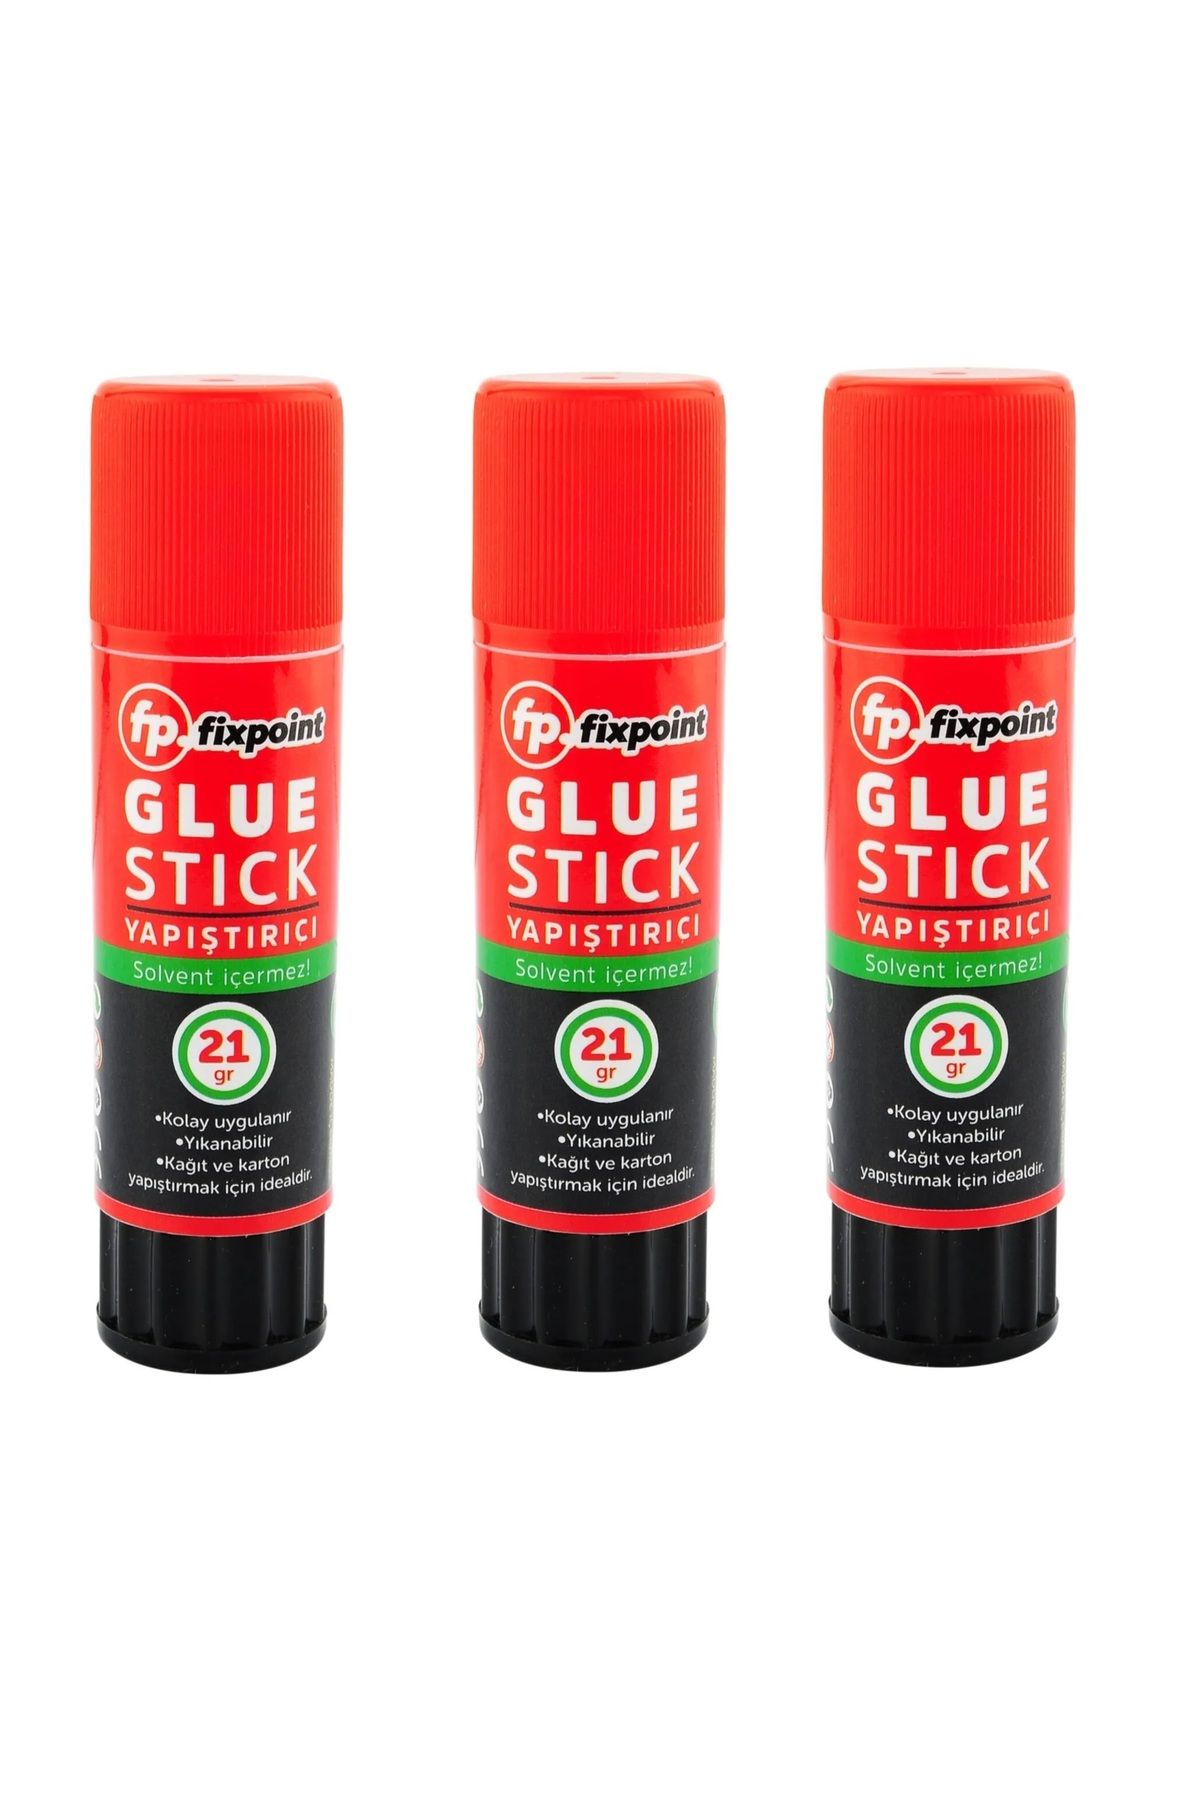 FixPoint Glue Stick Yapıştırıcı 21gr (3 Adet)